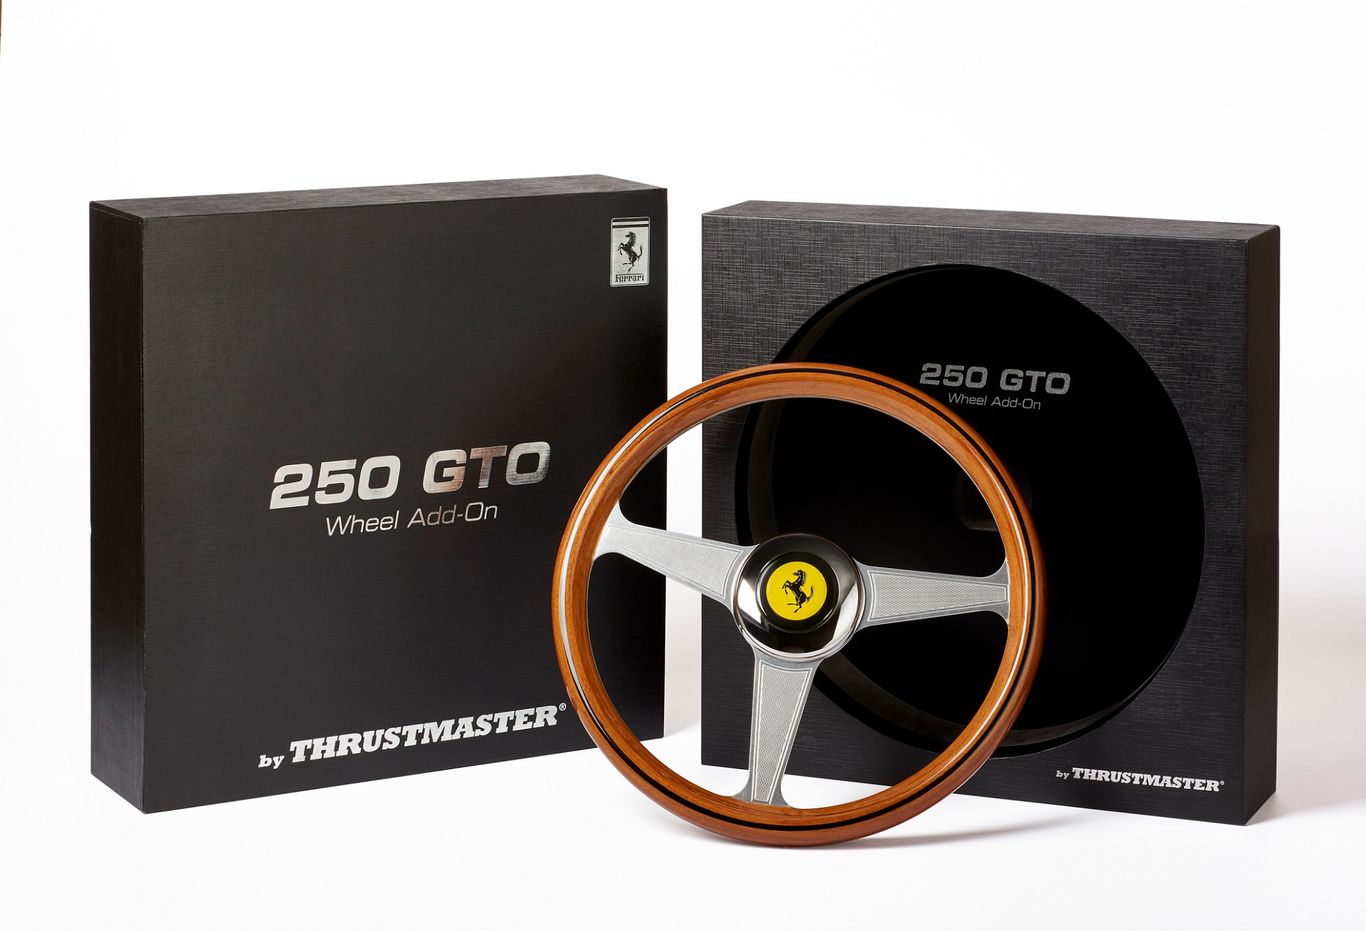 Thrustmaster Releases Replica Ferrari 250 GTO Steering Wheel